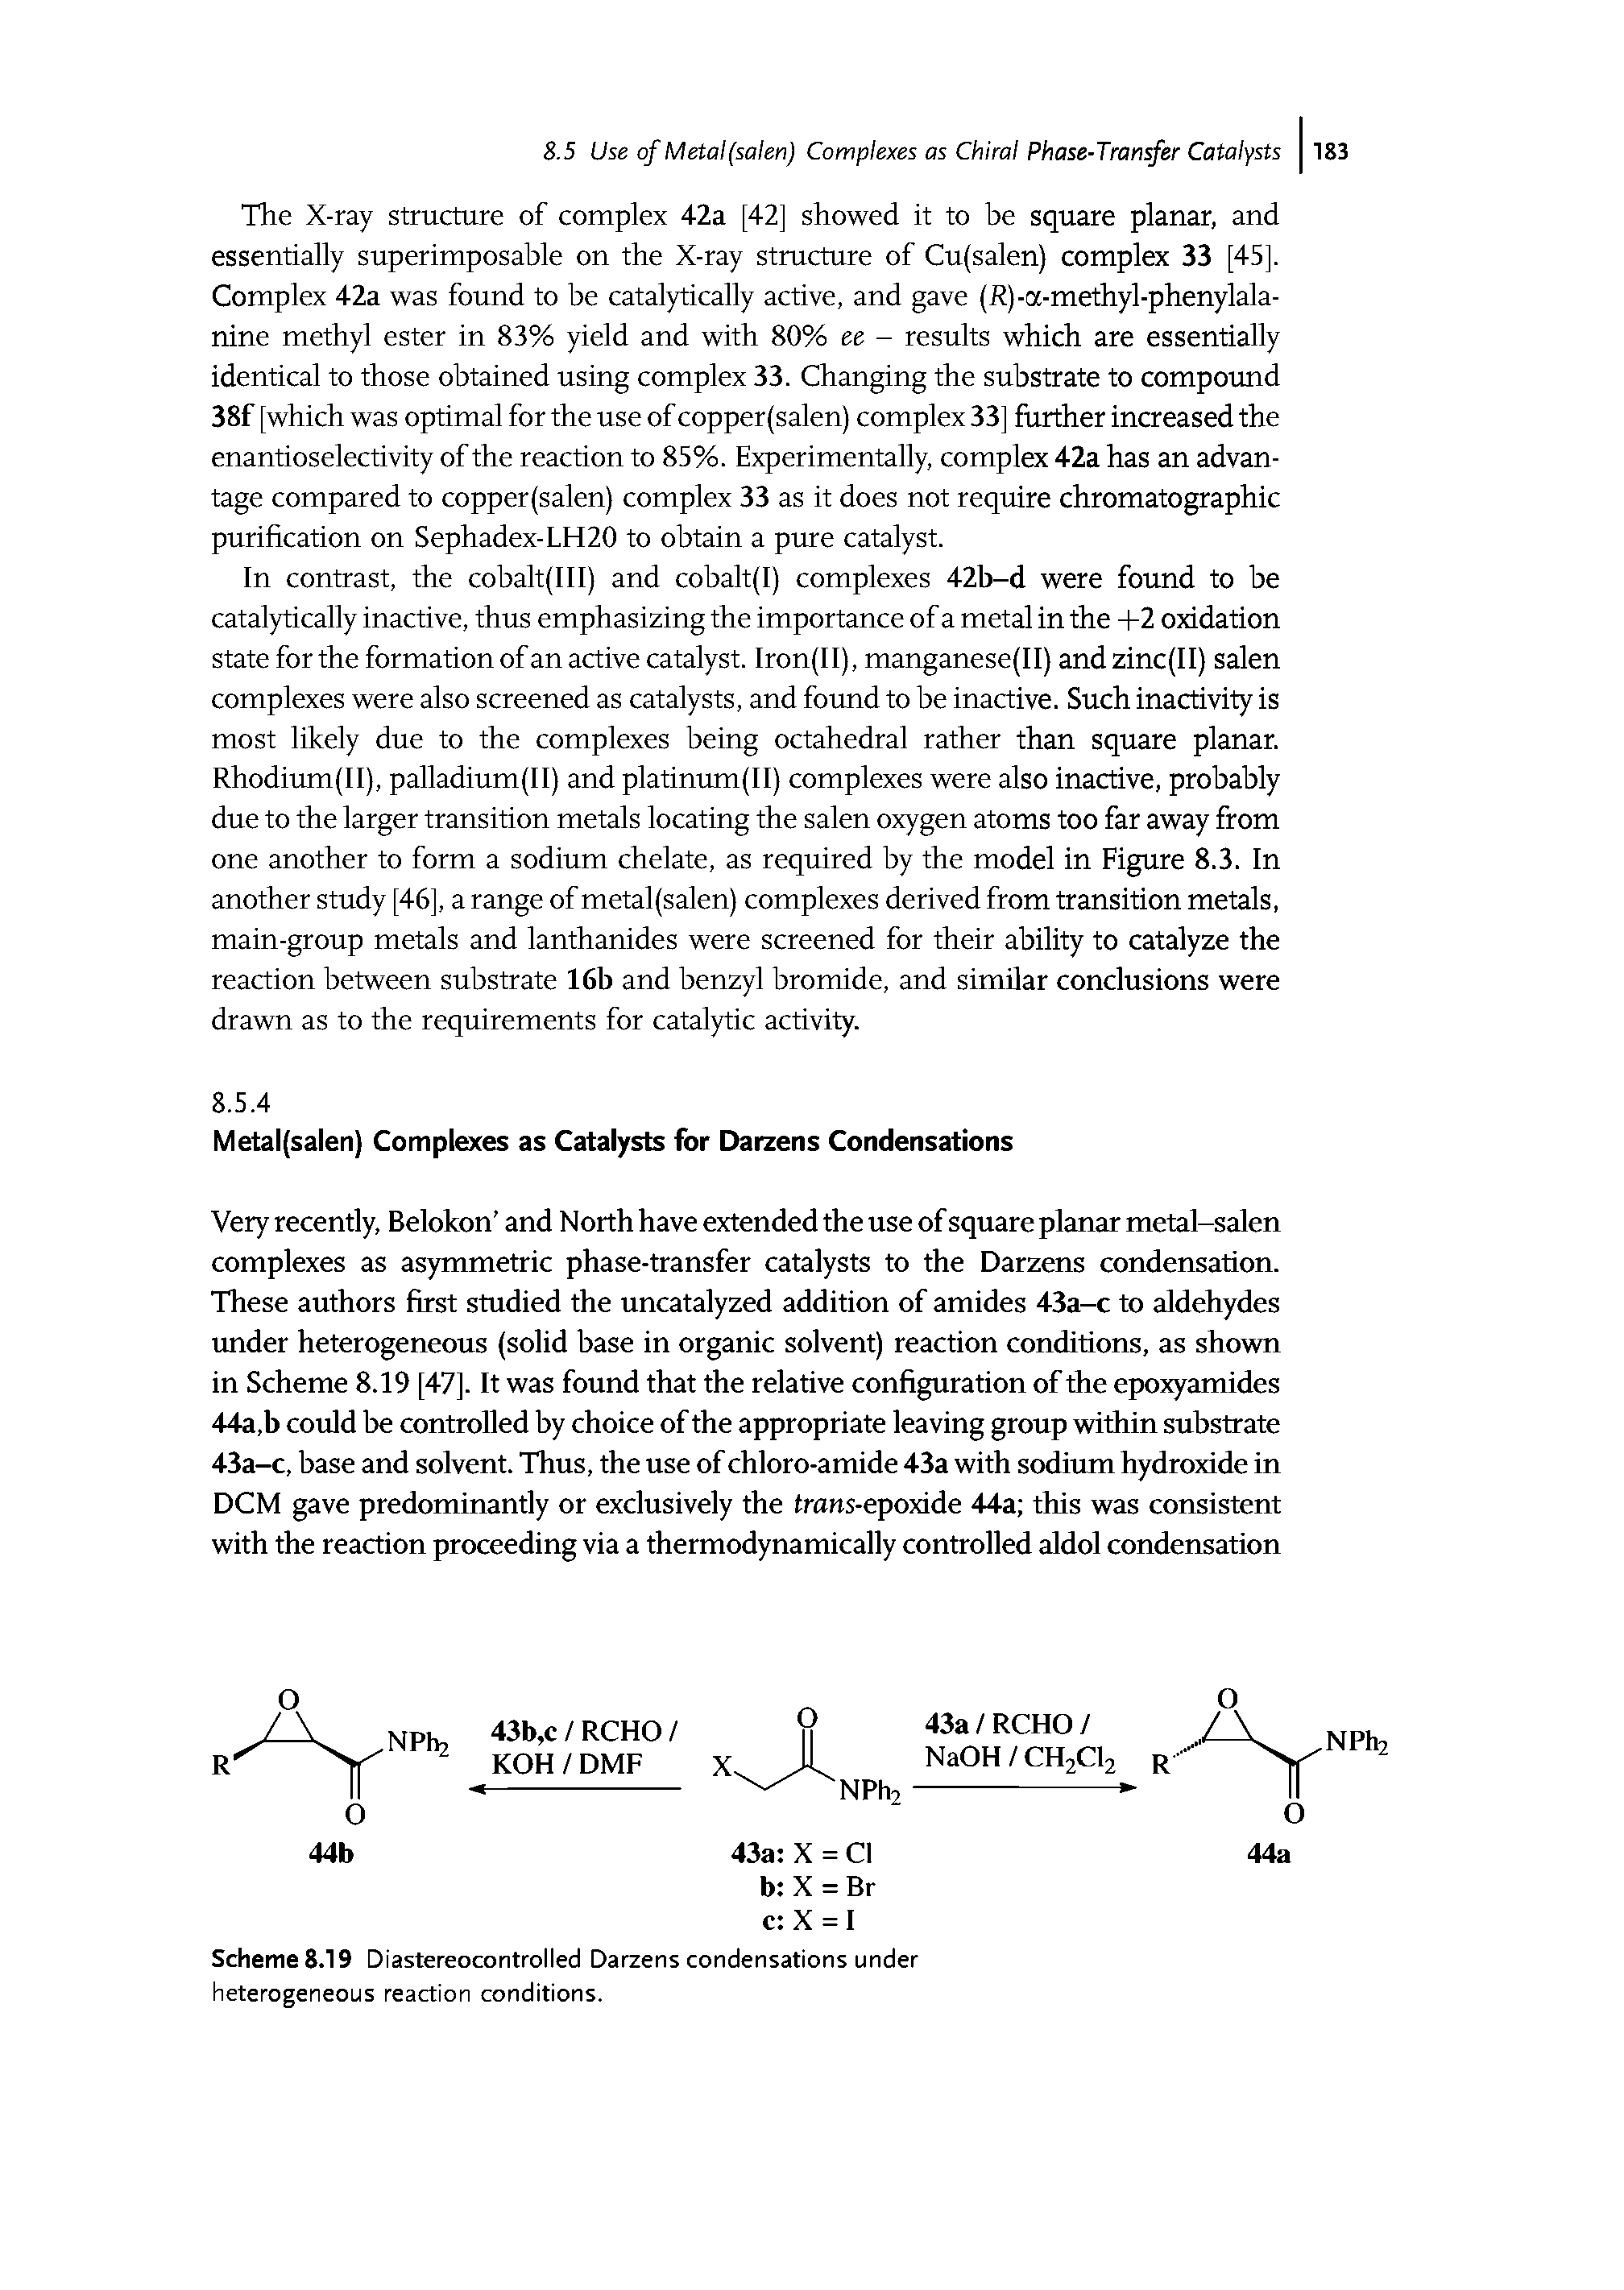 Scheme 8.19 Diastereocontrolled Darzens condensations under heterogeneous reaction conditions.